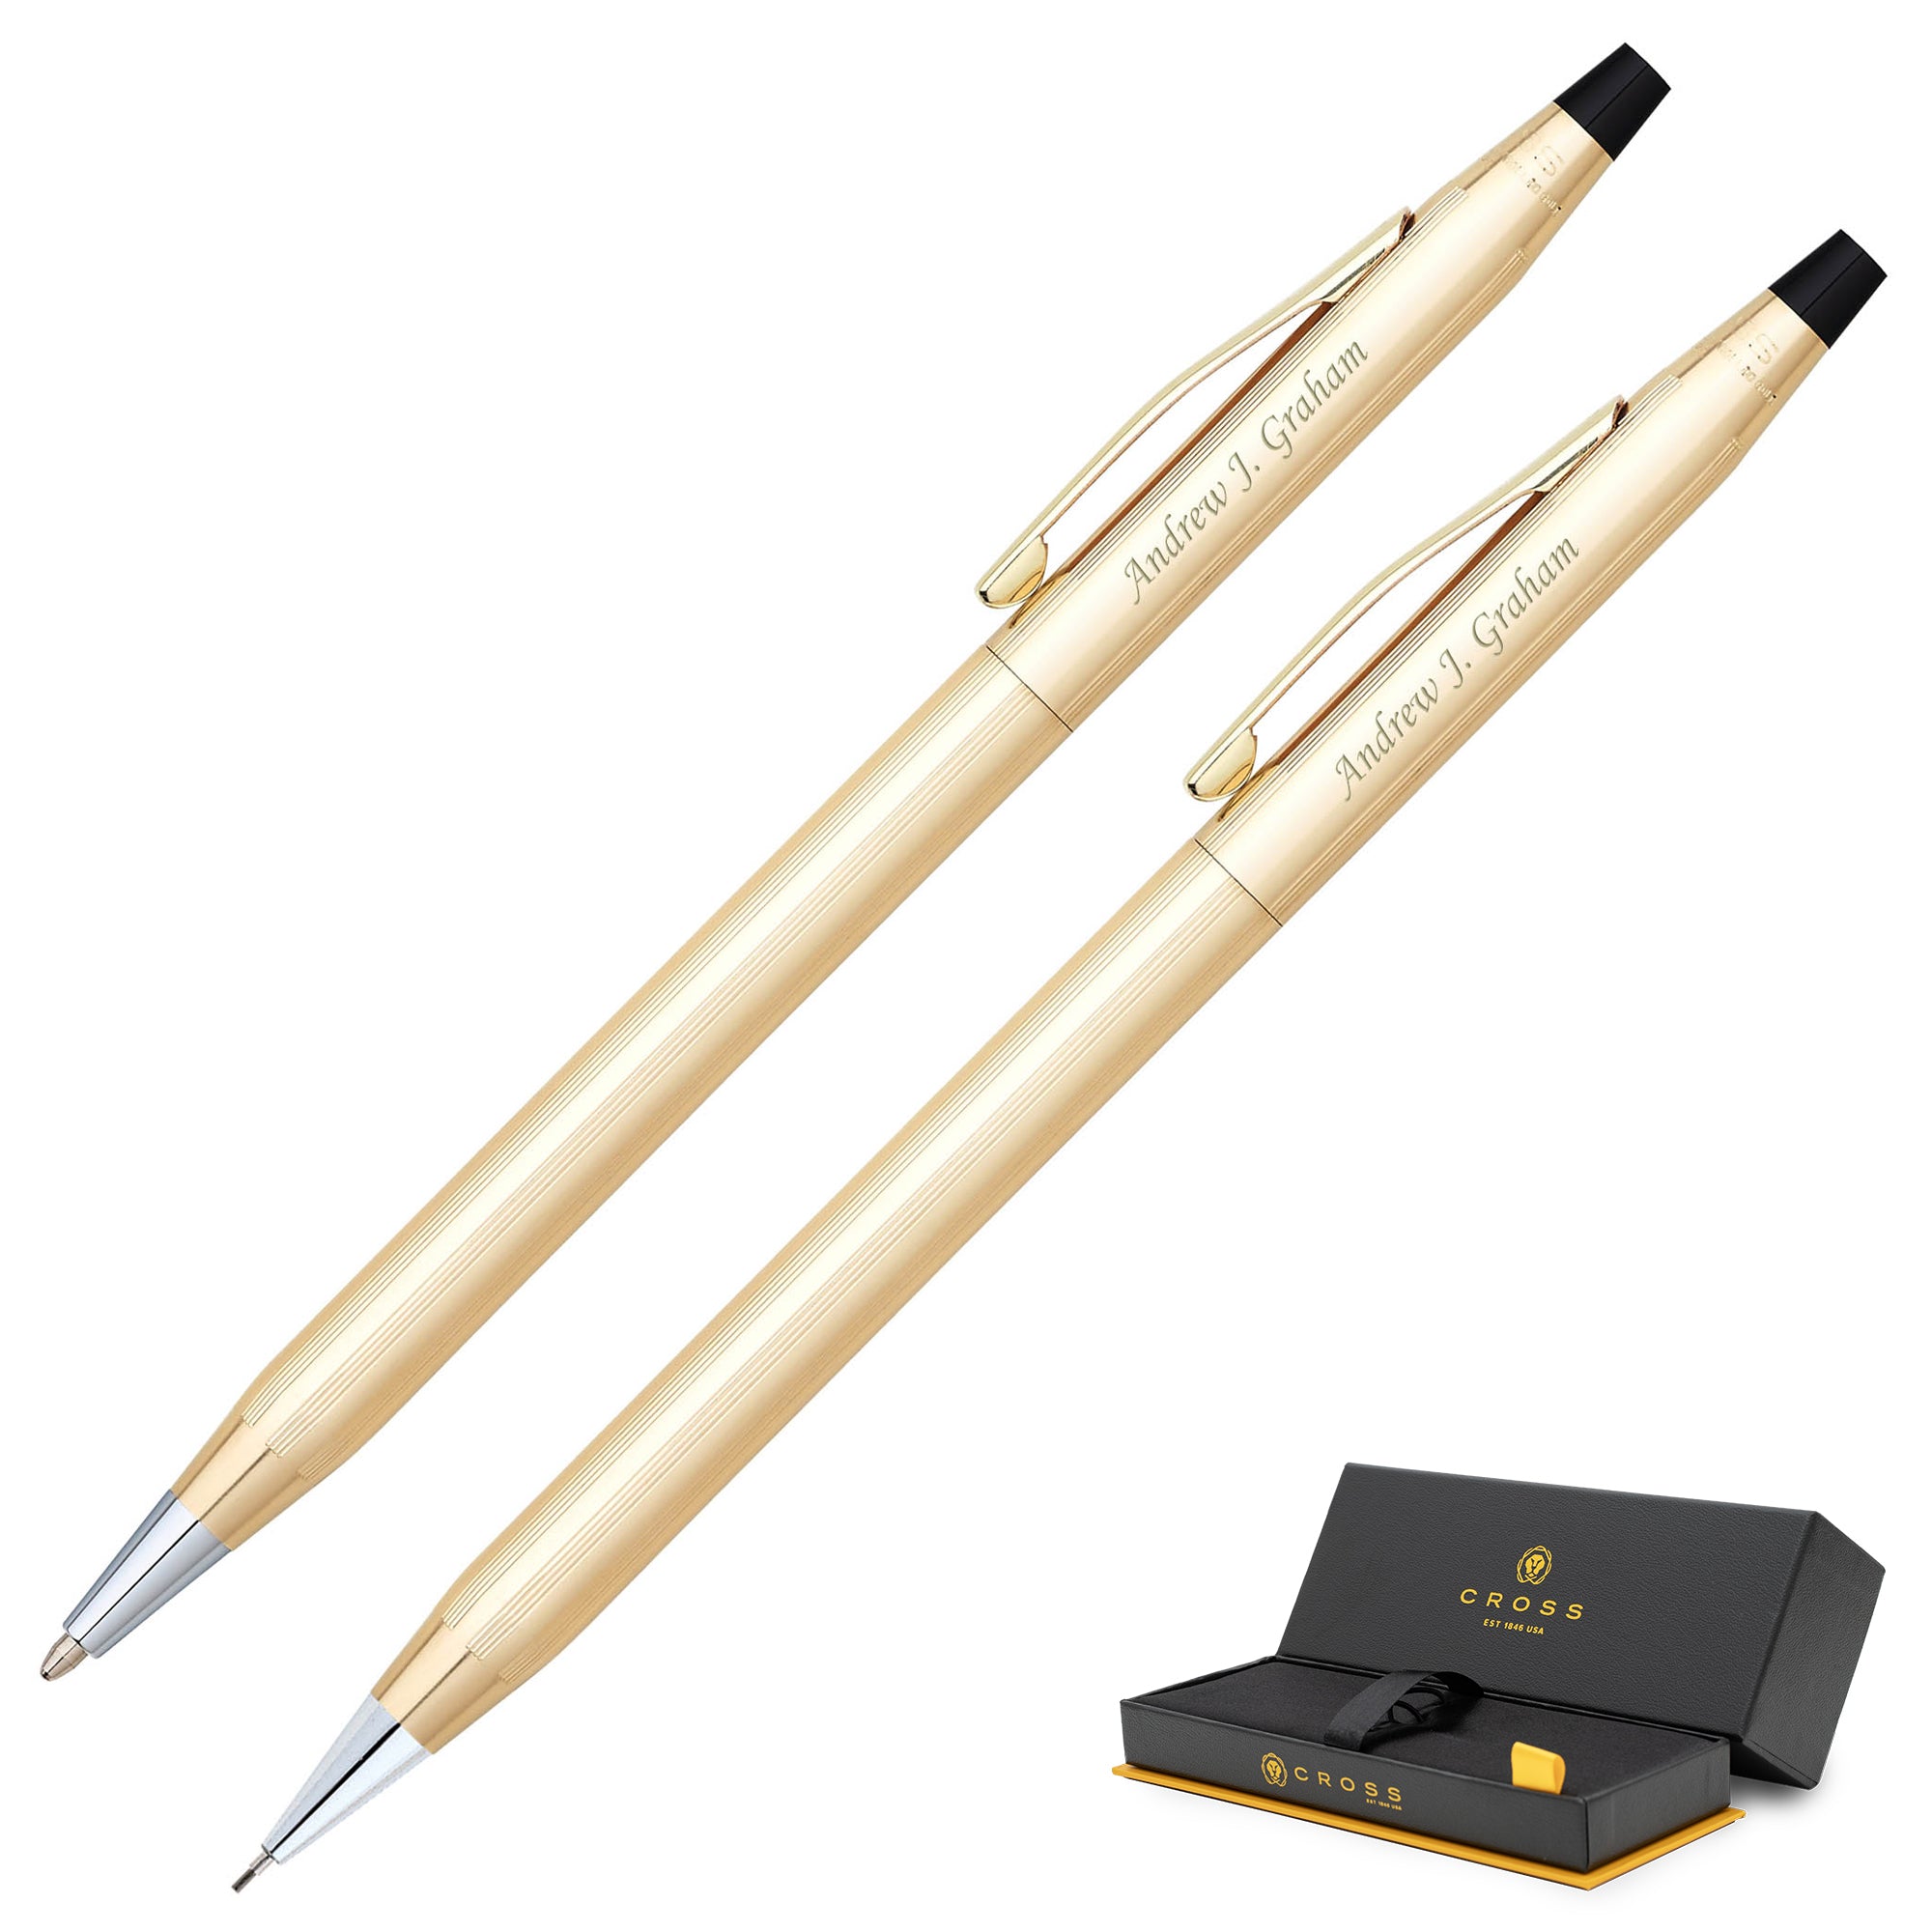 Gold Pens for Loved Ones: Top 10 Luxury Picks - Dayspring Pens